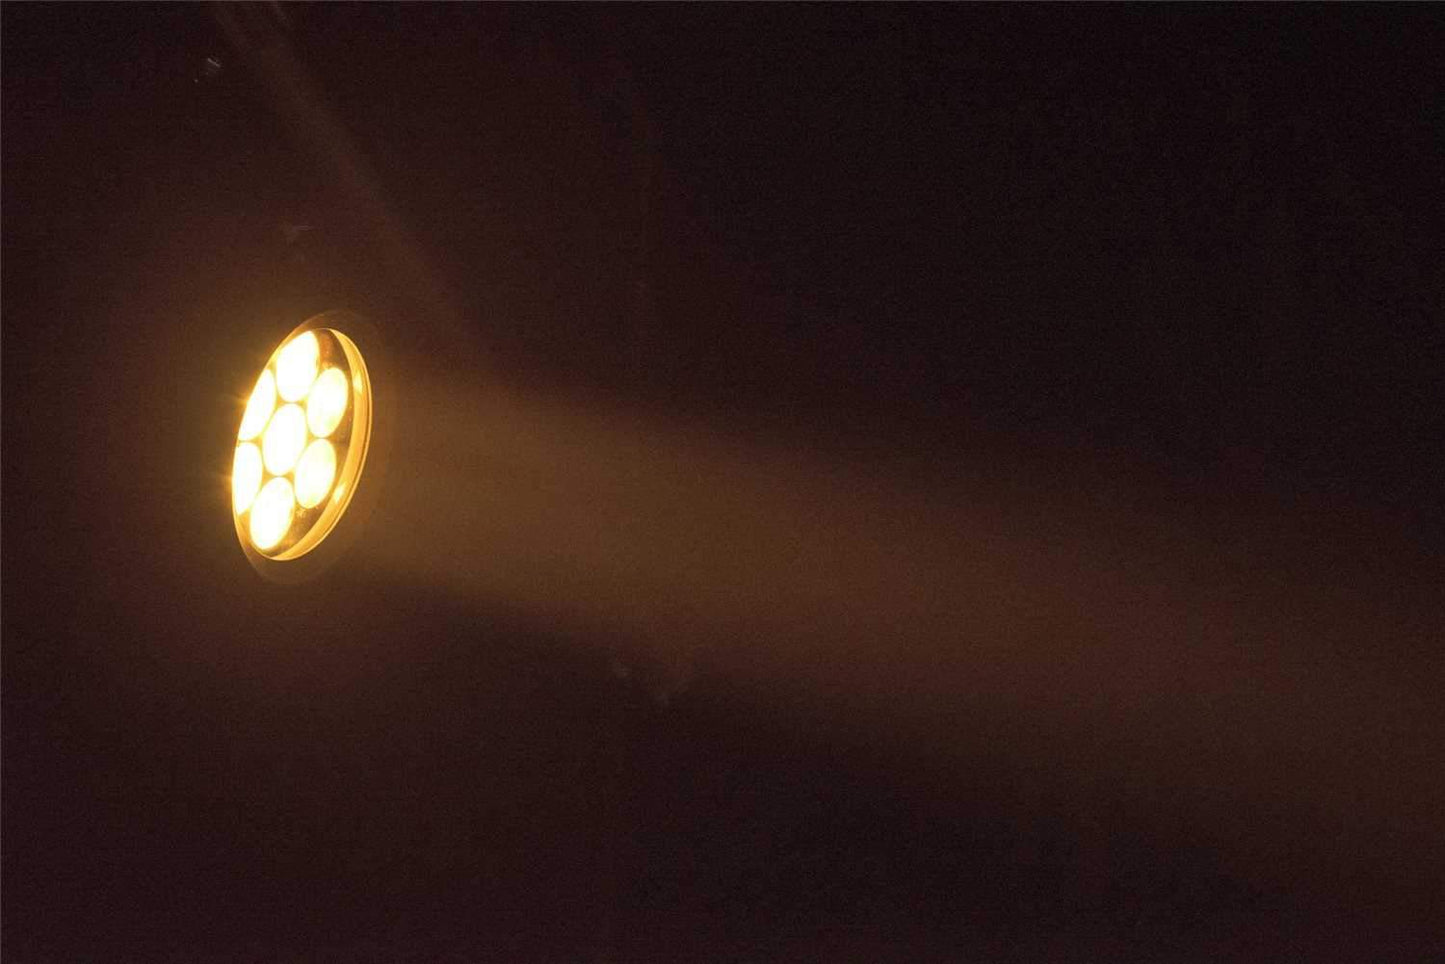 Chauvet COLORado 1-Quad Zoom Tour LED Wash Light - ProSound and Stage Lighting